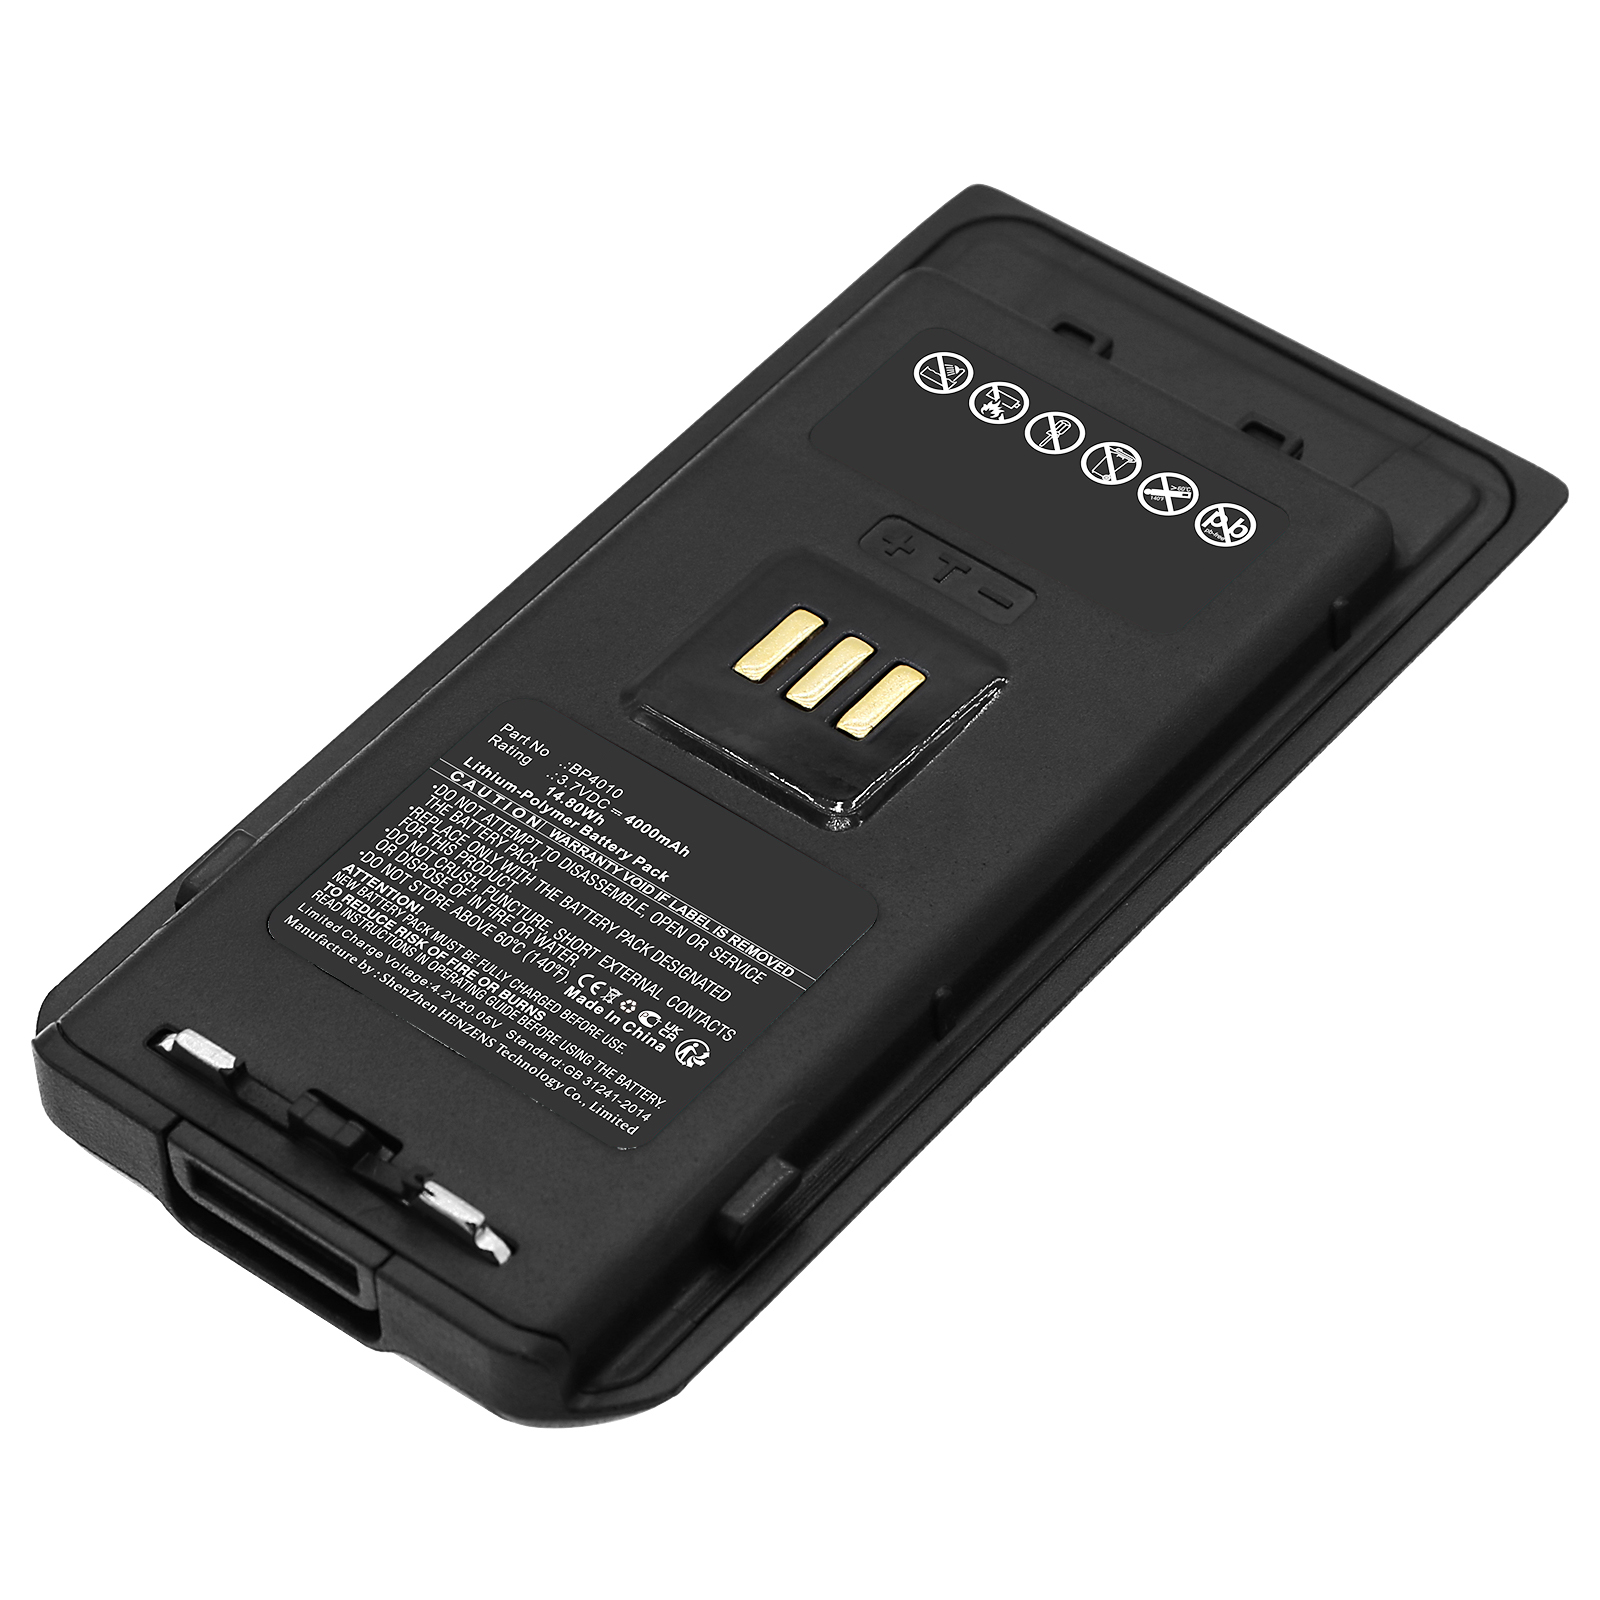 Synergy Digital 2-Way Radio Battery, Compatible with Hytera BP4010 2-Way Radio Battery (Li-Pol, 7.4V, 4000mAh)